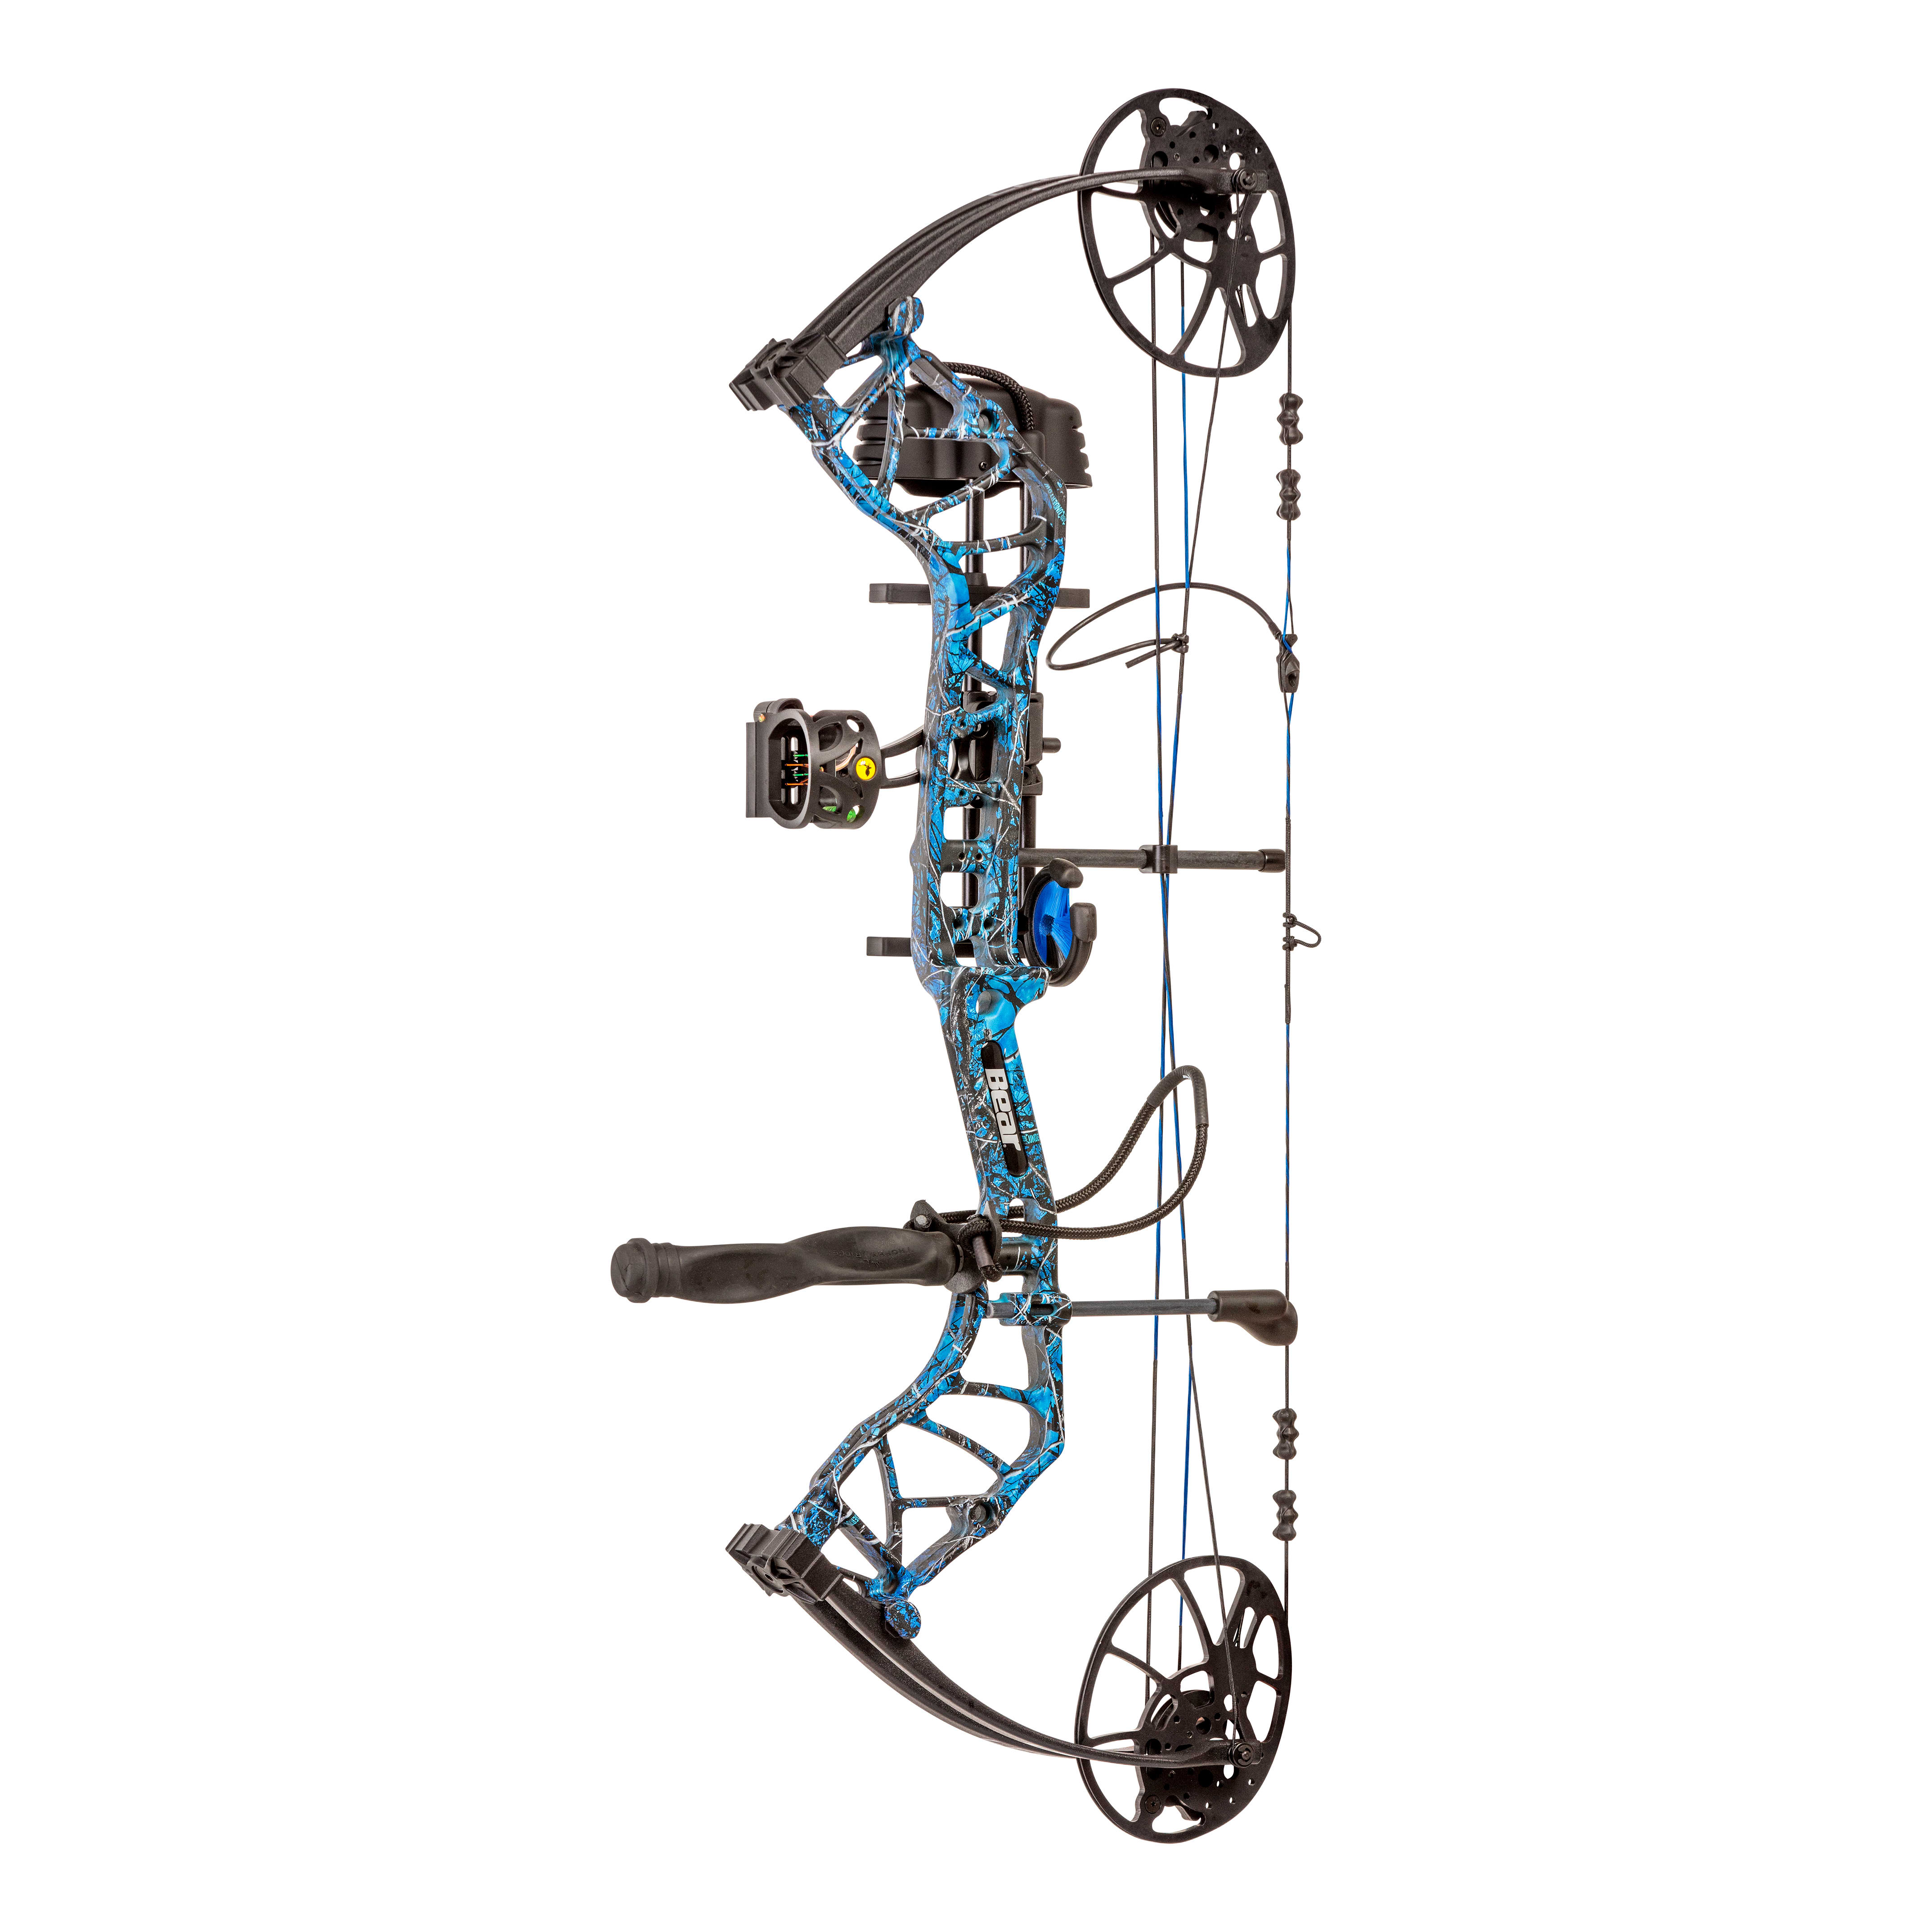 Bear® Archery Legit Compound Bow Package - Undertow Camo